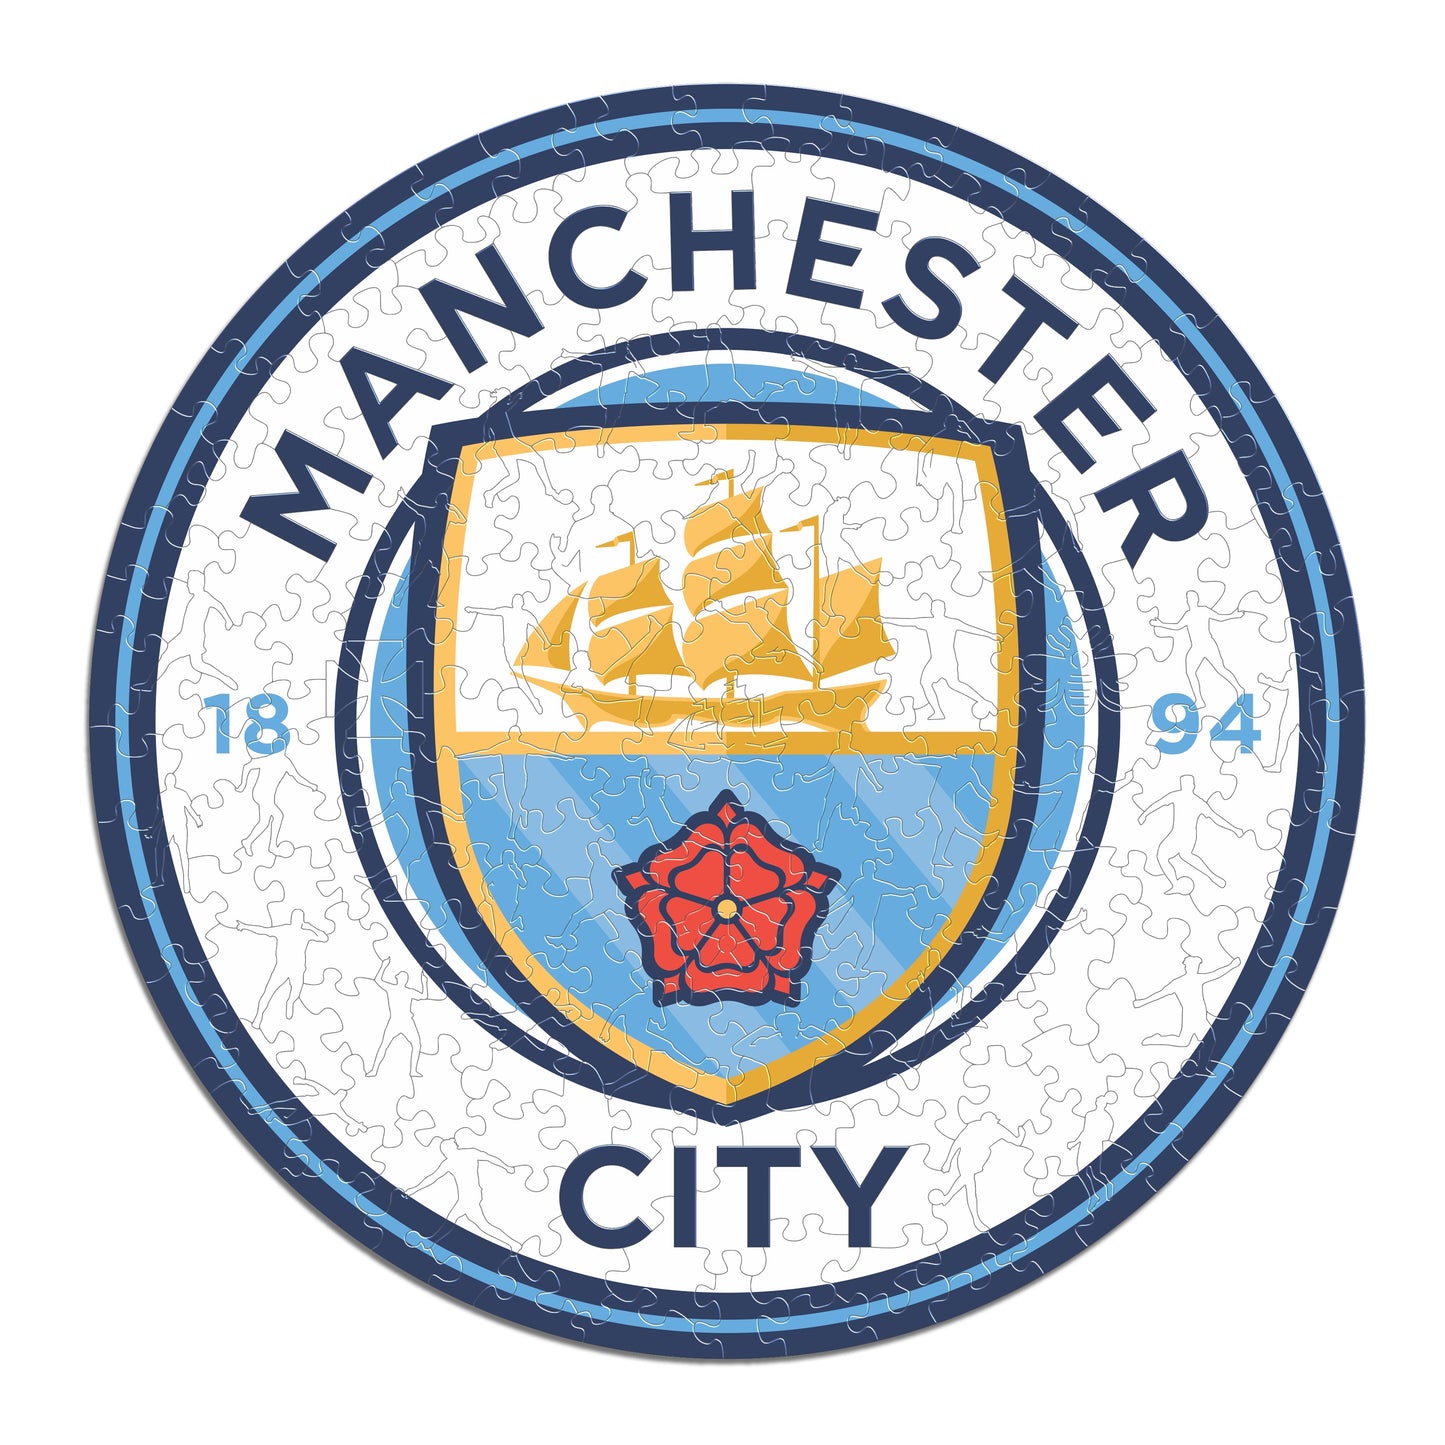 2 PACK Manchester City FC® Logo + Foden